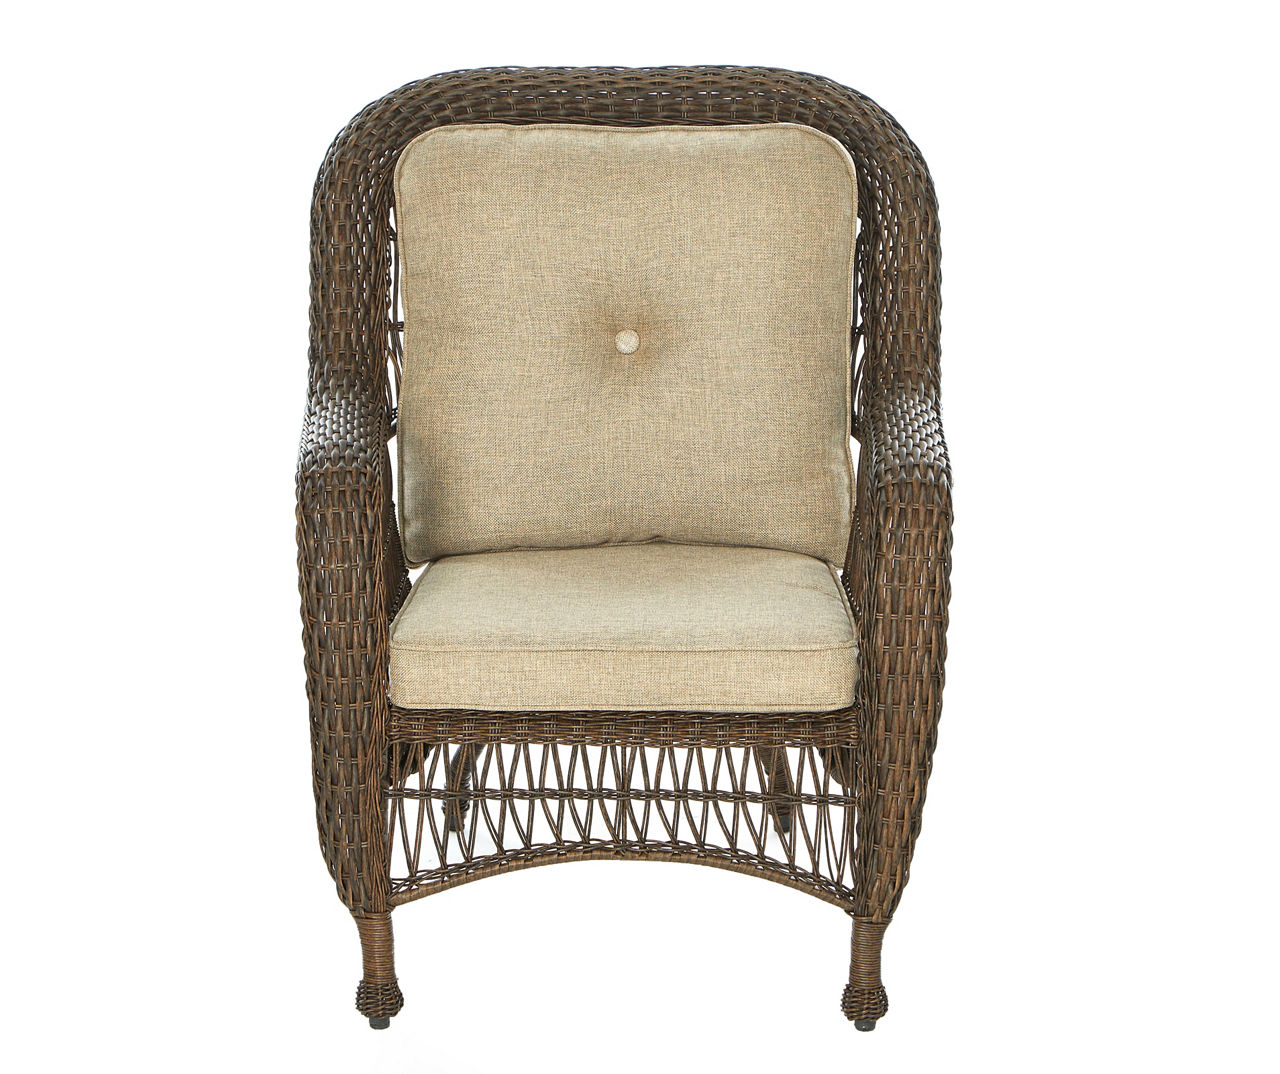 Patio Chair Cushions | Proven #1 | Wicker Living, LLC